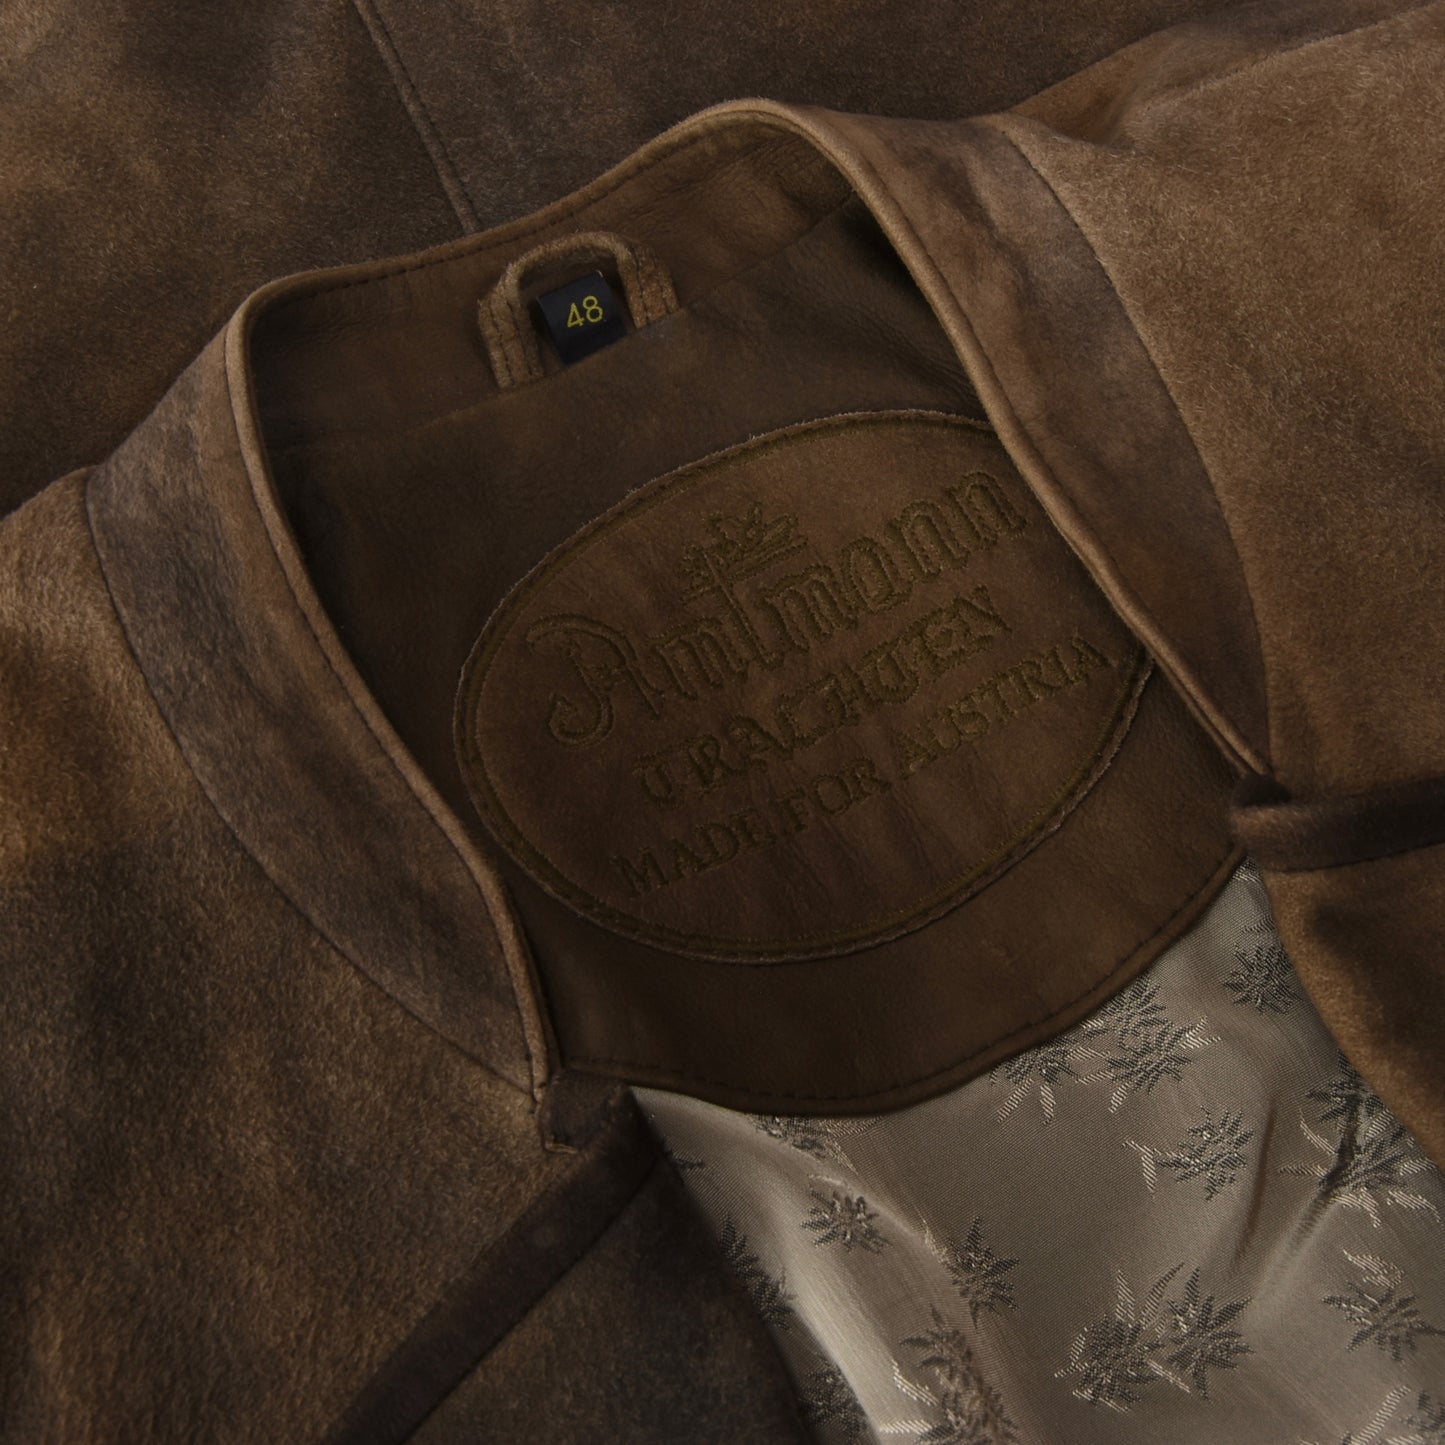 Amtmann Trachten Leather Janker/Jacket Size 48 - Brown